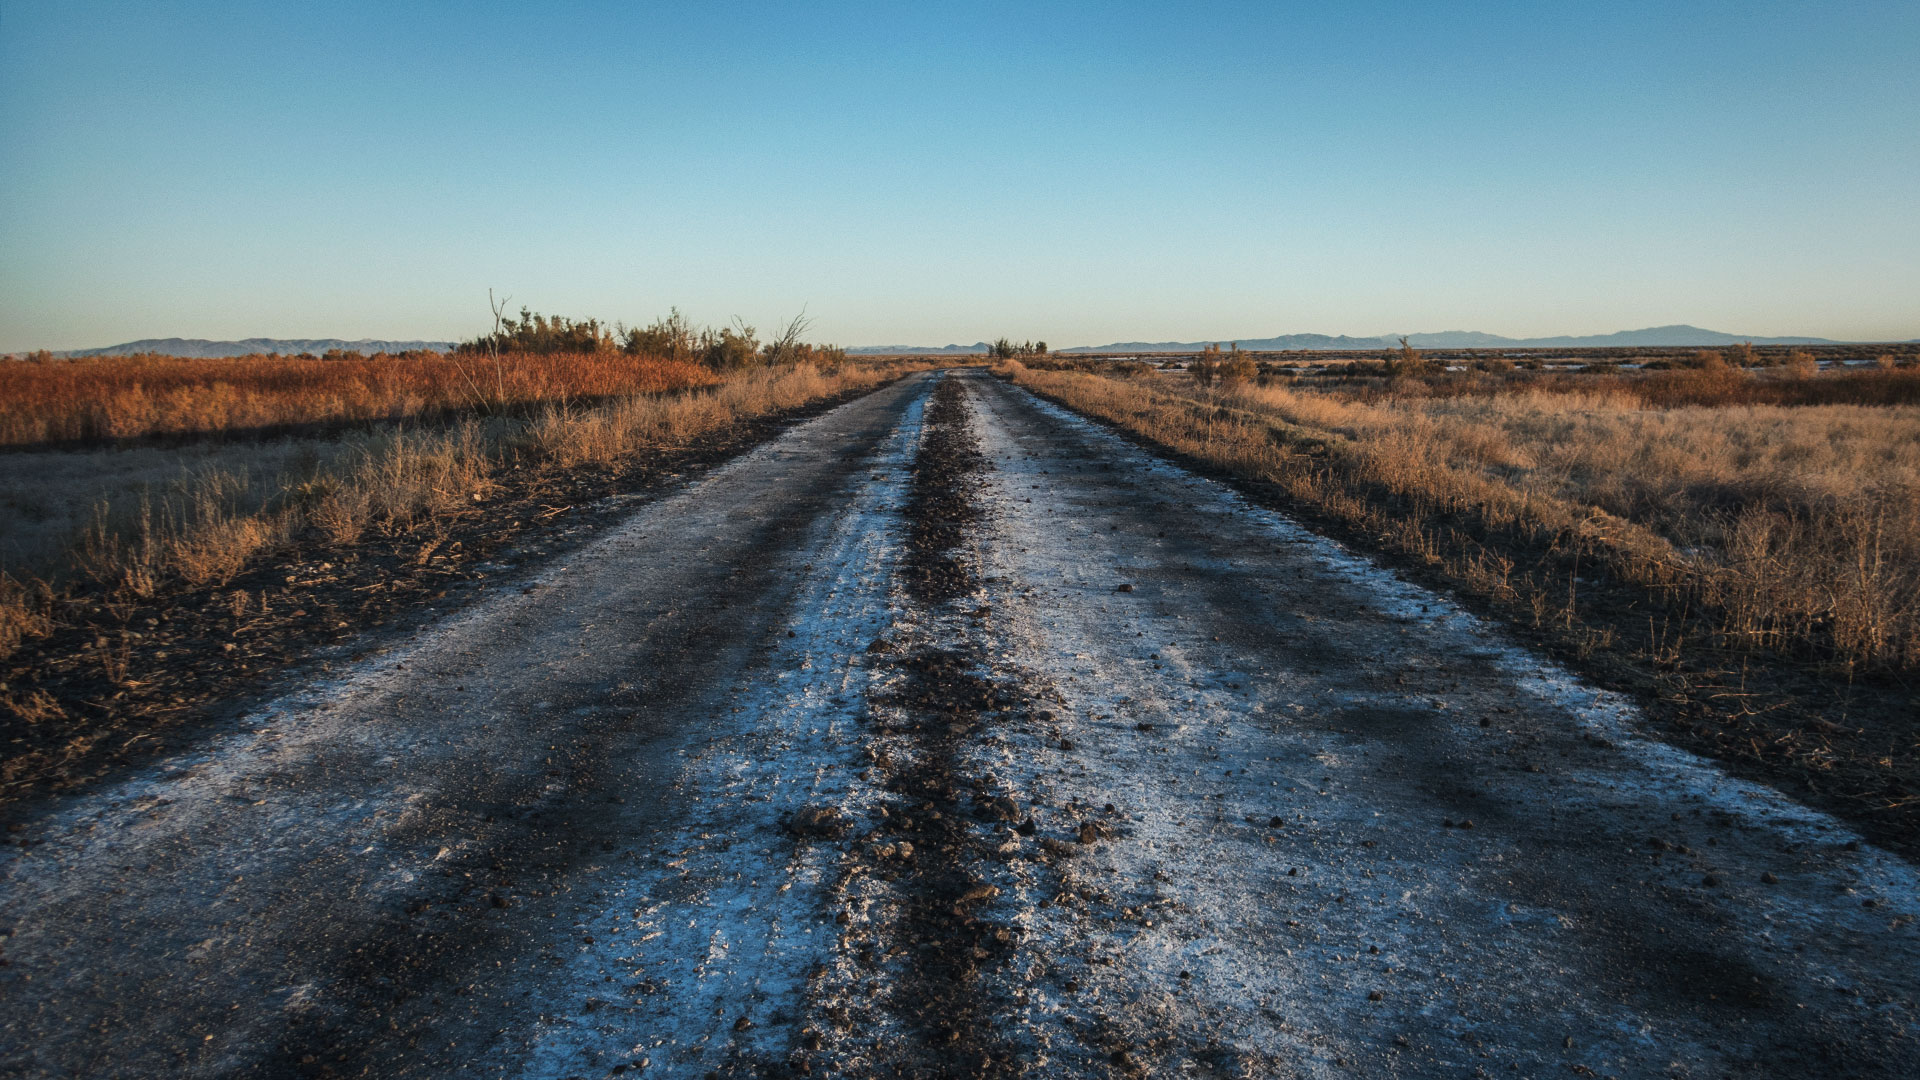 Chalky dirt roads at Stillwater National Wildlife Refuge